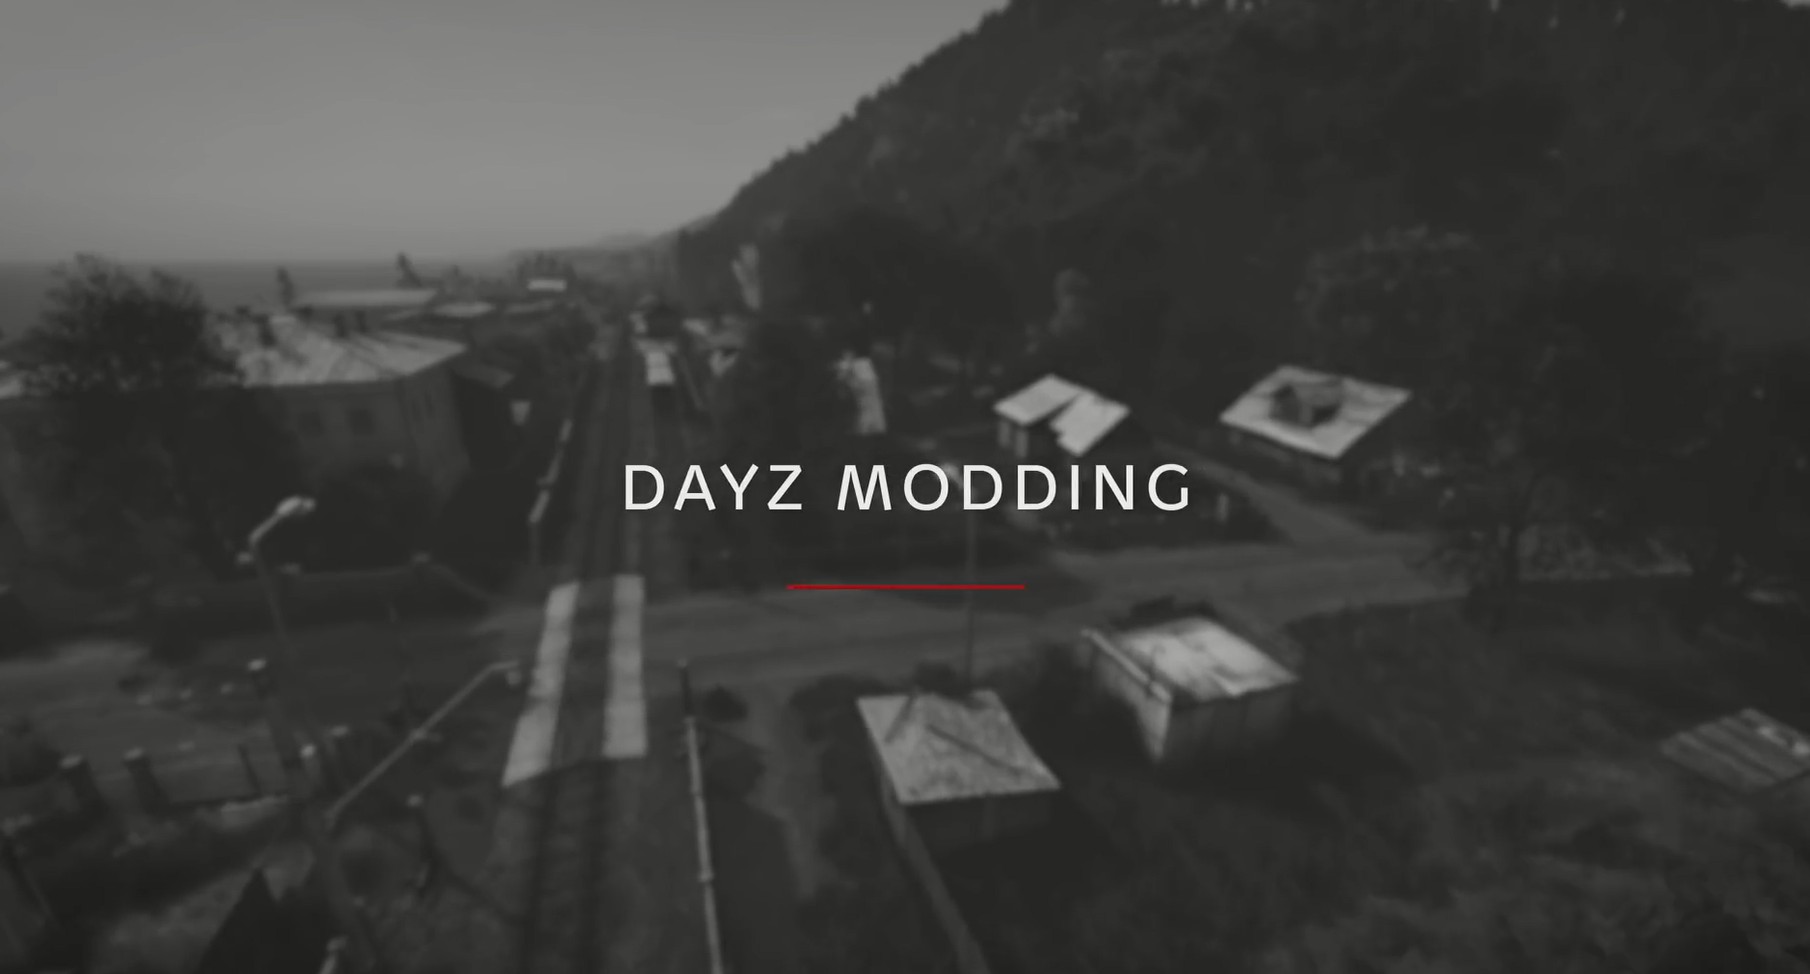 《DayZ》进入Beta测试阶段 Mod工具已开放下载 